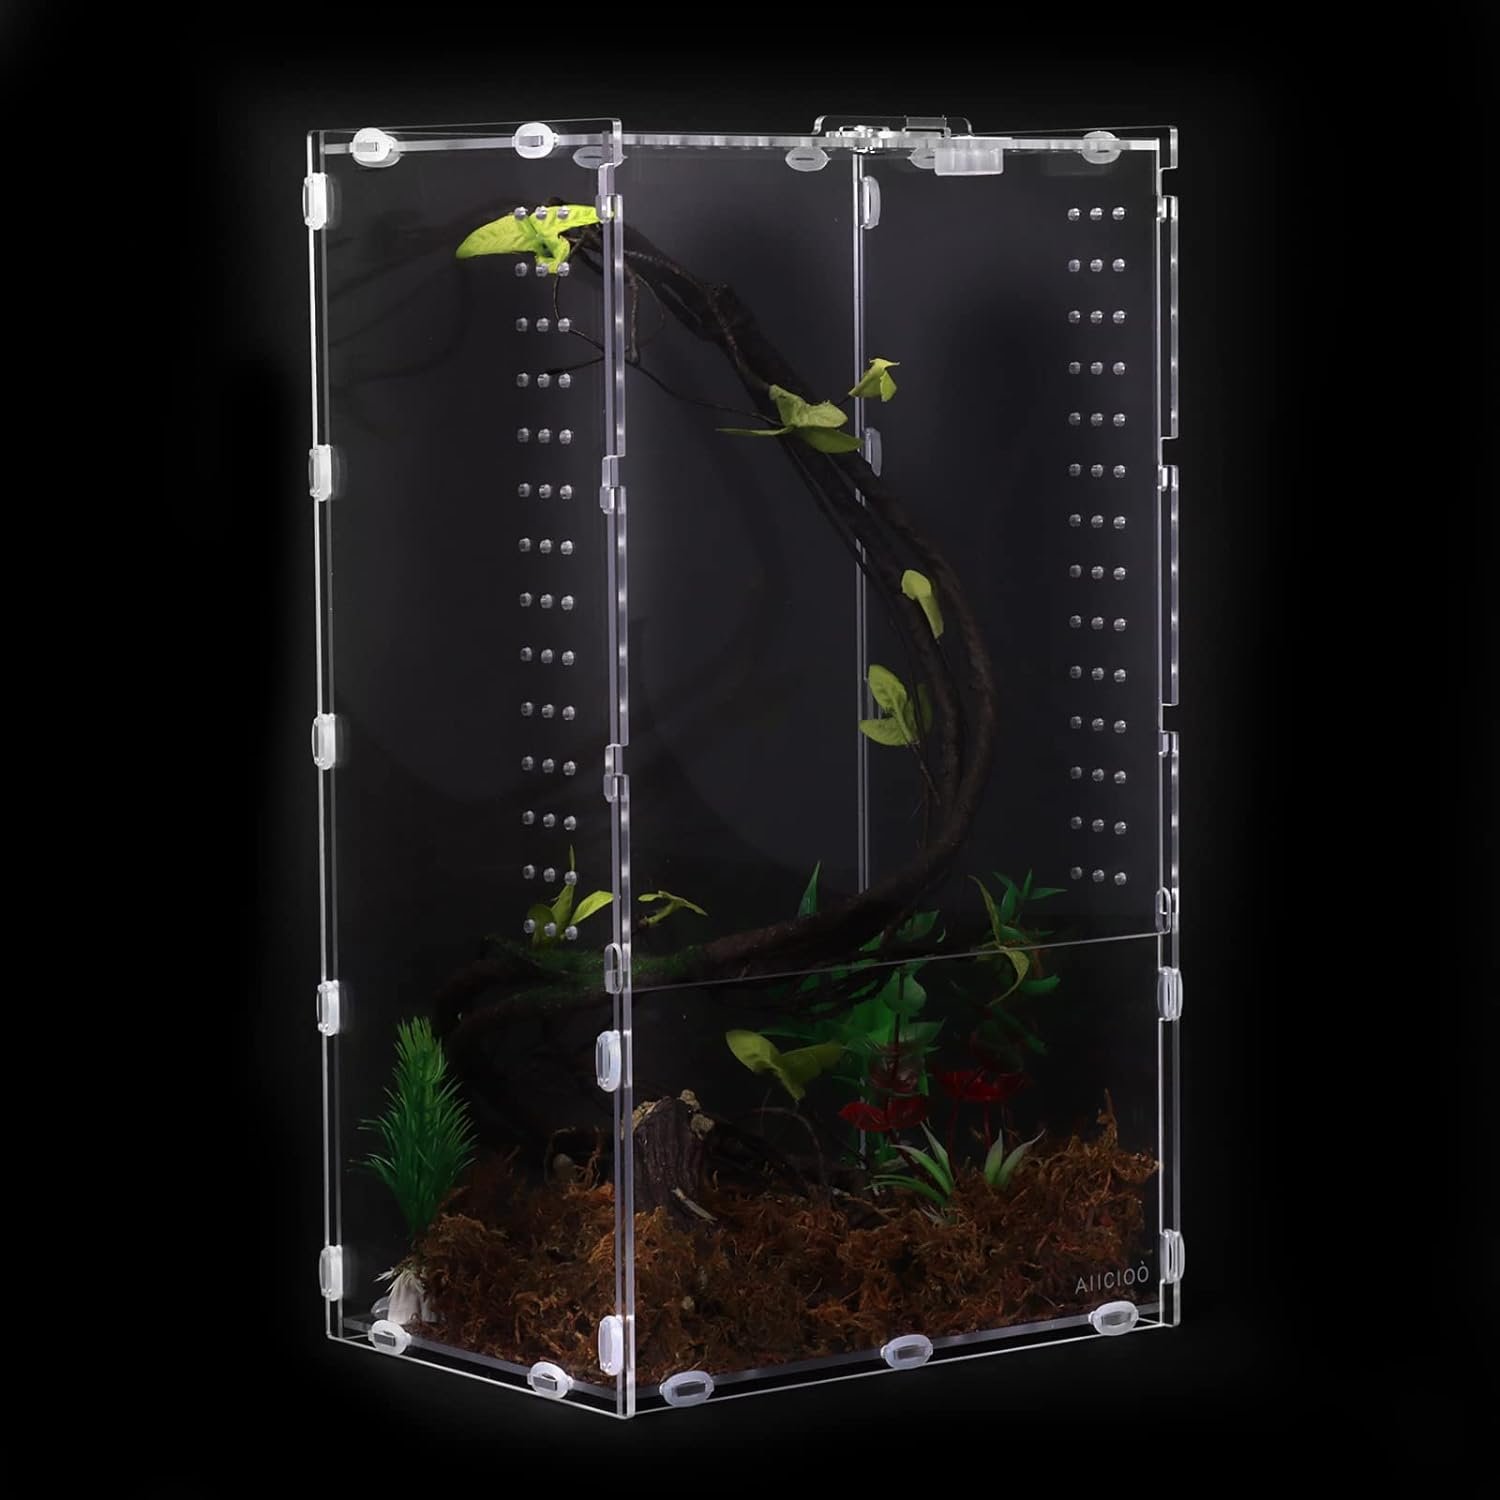 Micro Habitat Terrarium Enclosure 8x6x14 Inches Clear Acrylic Reptile Tank for Jumping Spiders Tarantula Insect Small Tree Dwelling Reptiles